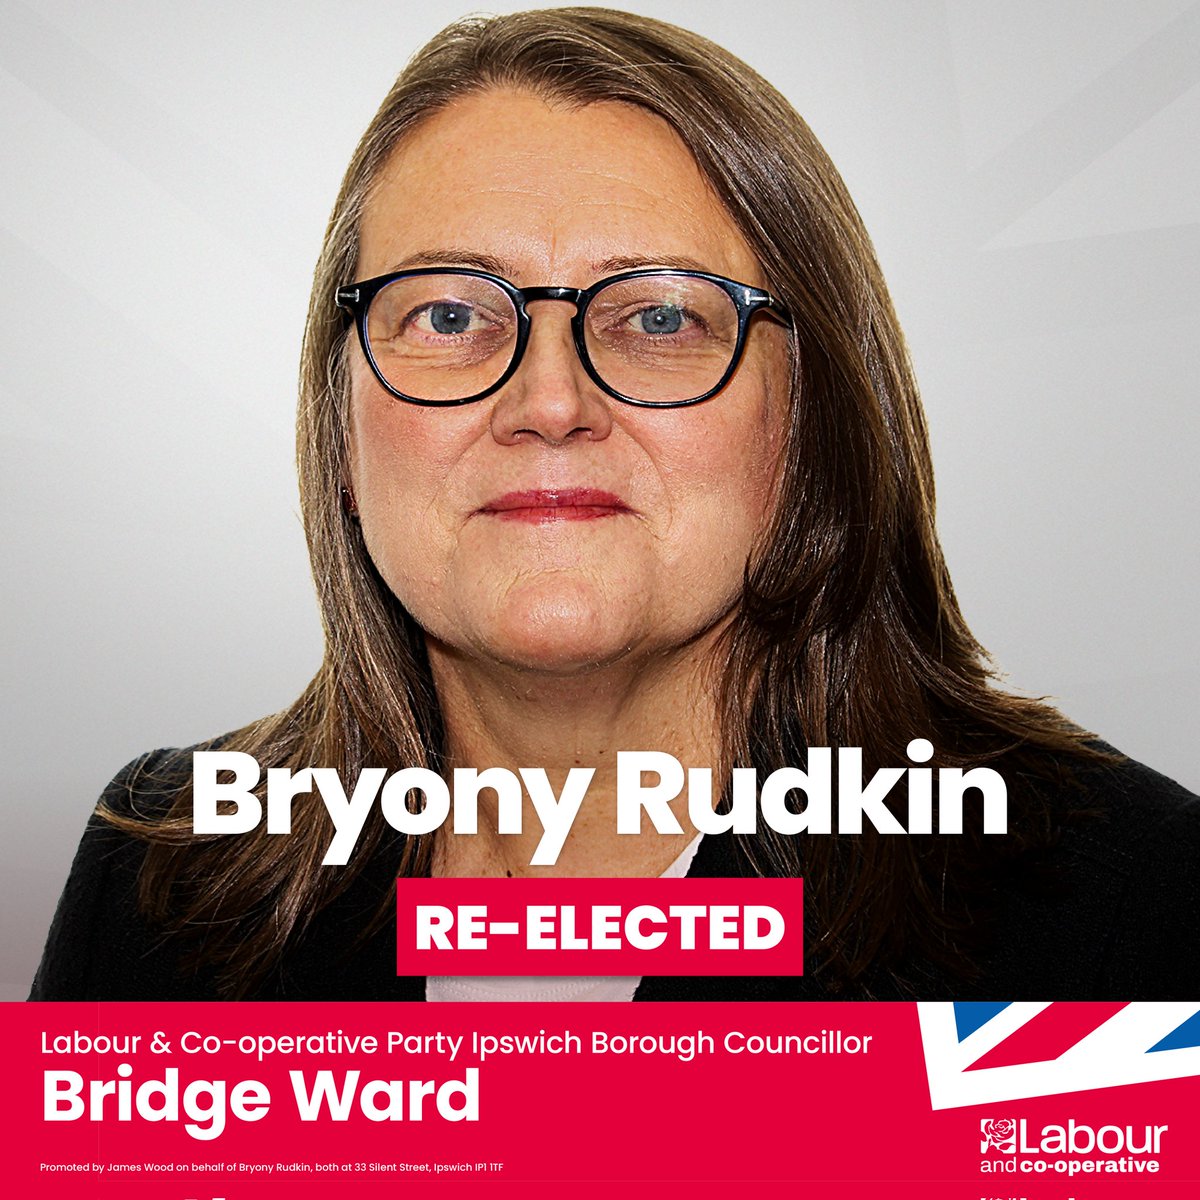 Bridge ward: Conservative 450, Reform 184, Green 166, Labour 780, Lib Dem 108. Labour hold for Bryony Rudkin.